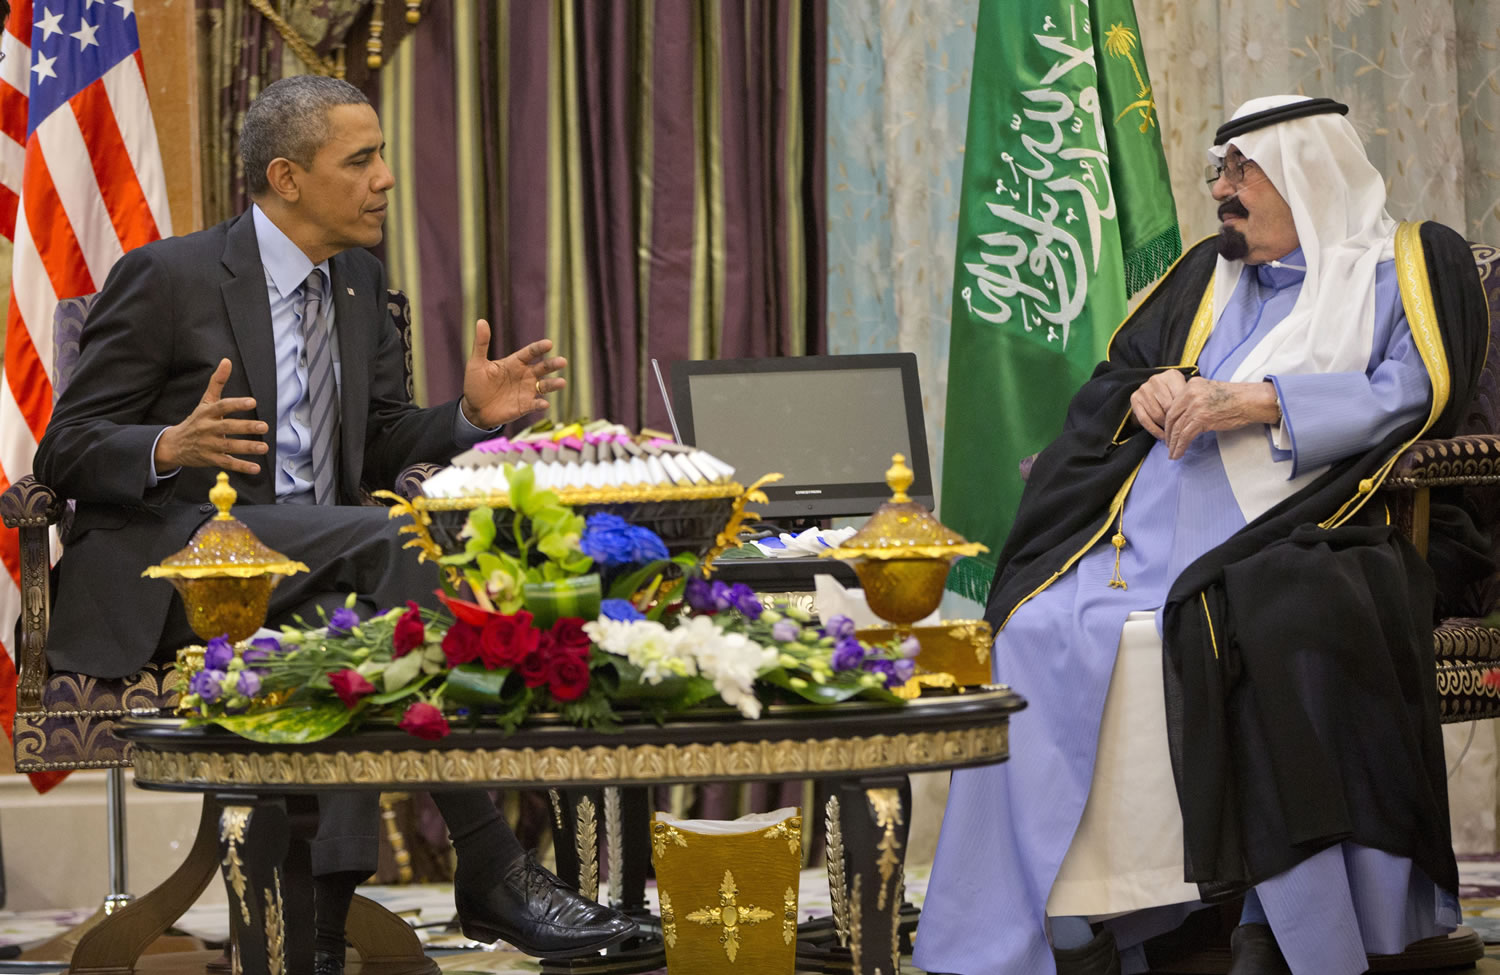 President Barack Obama meets with Saudi King Abdullah at Rawdat Khuraim, Saudi Arabia, Friday, March 28, 2014.